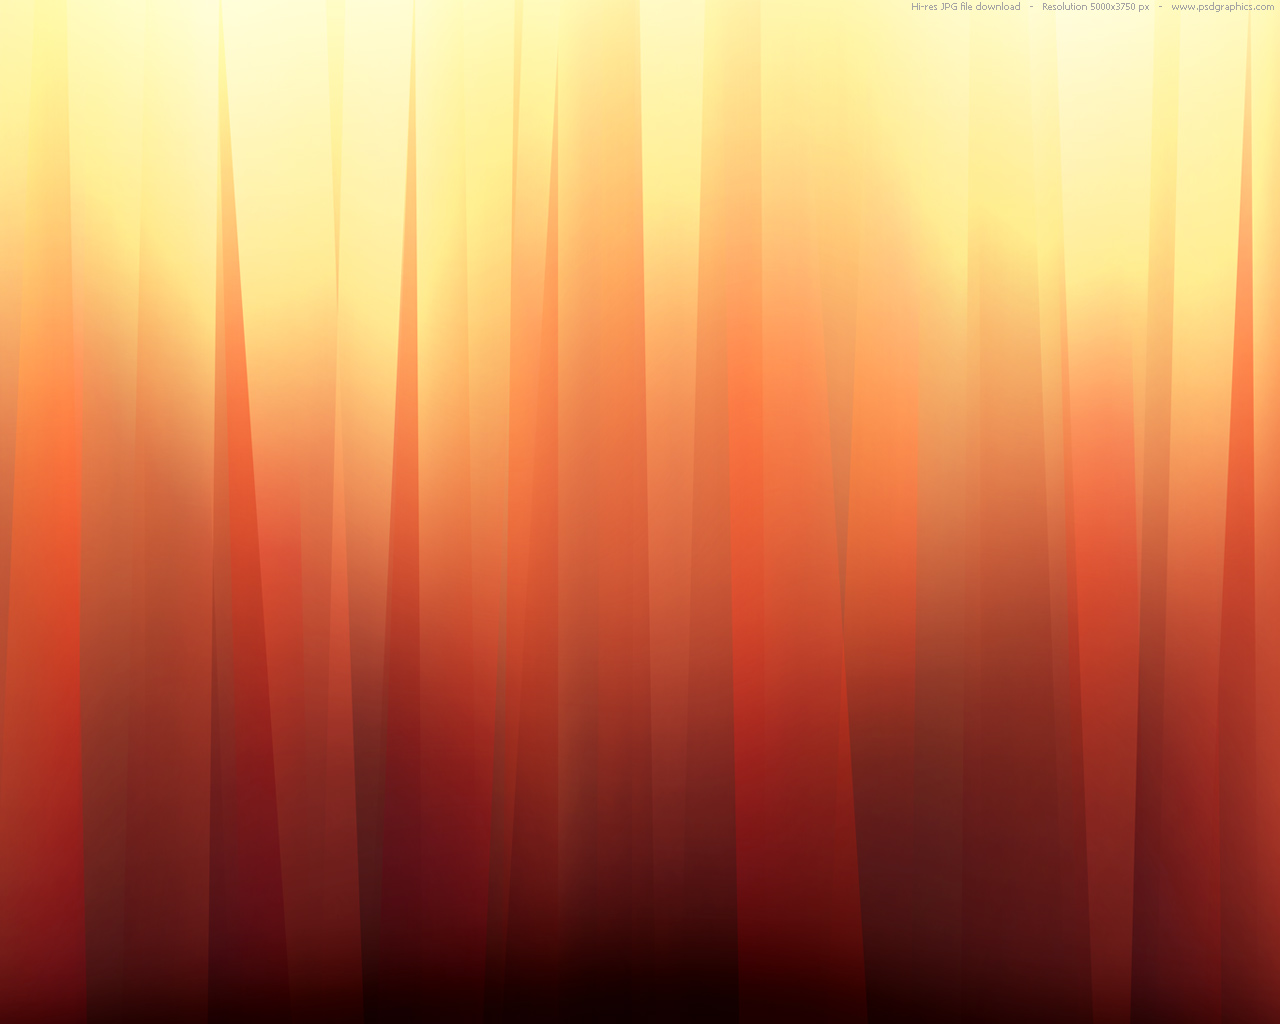 background wallpaper for photoshop,red,orange,light,yellow,sunlight